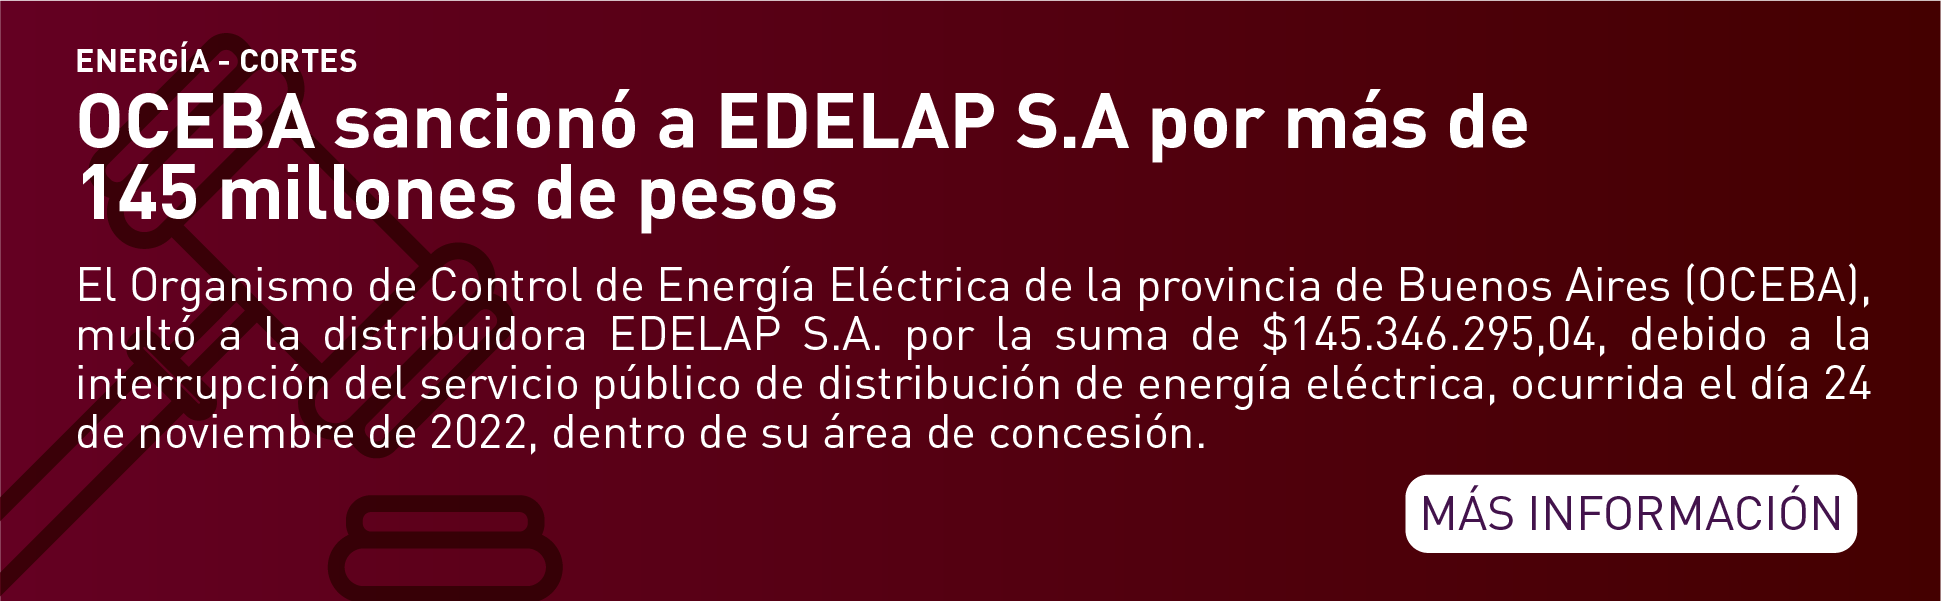 OCEBA sancionó a EDELAP S.A por más de 145 millones de pesos